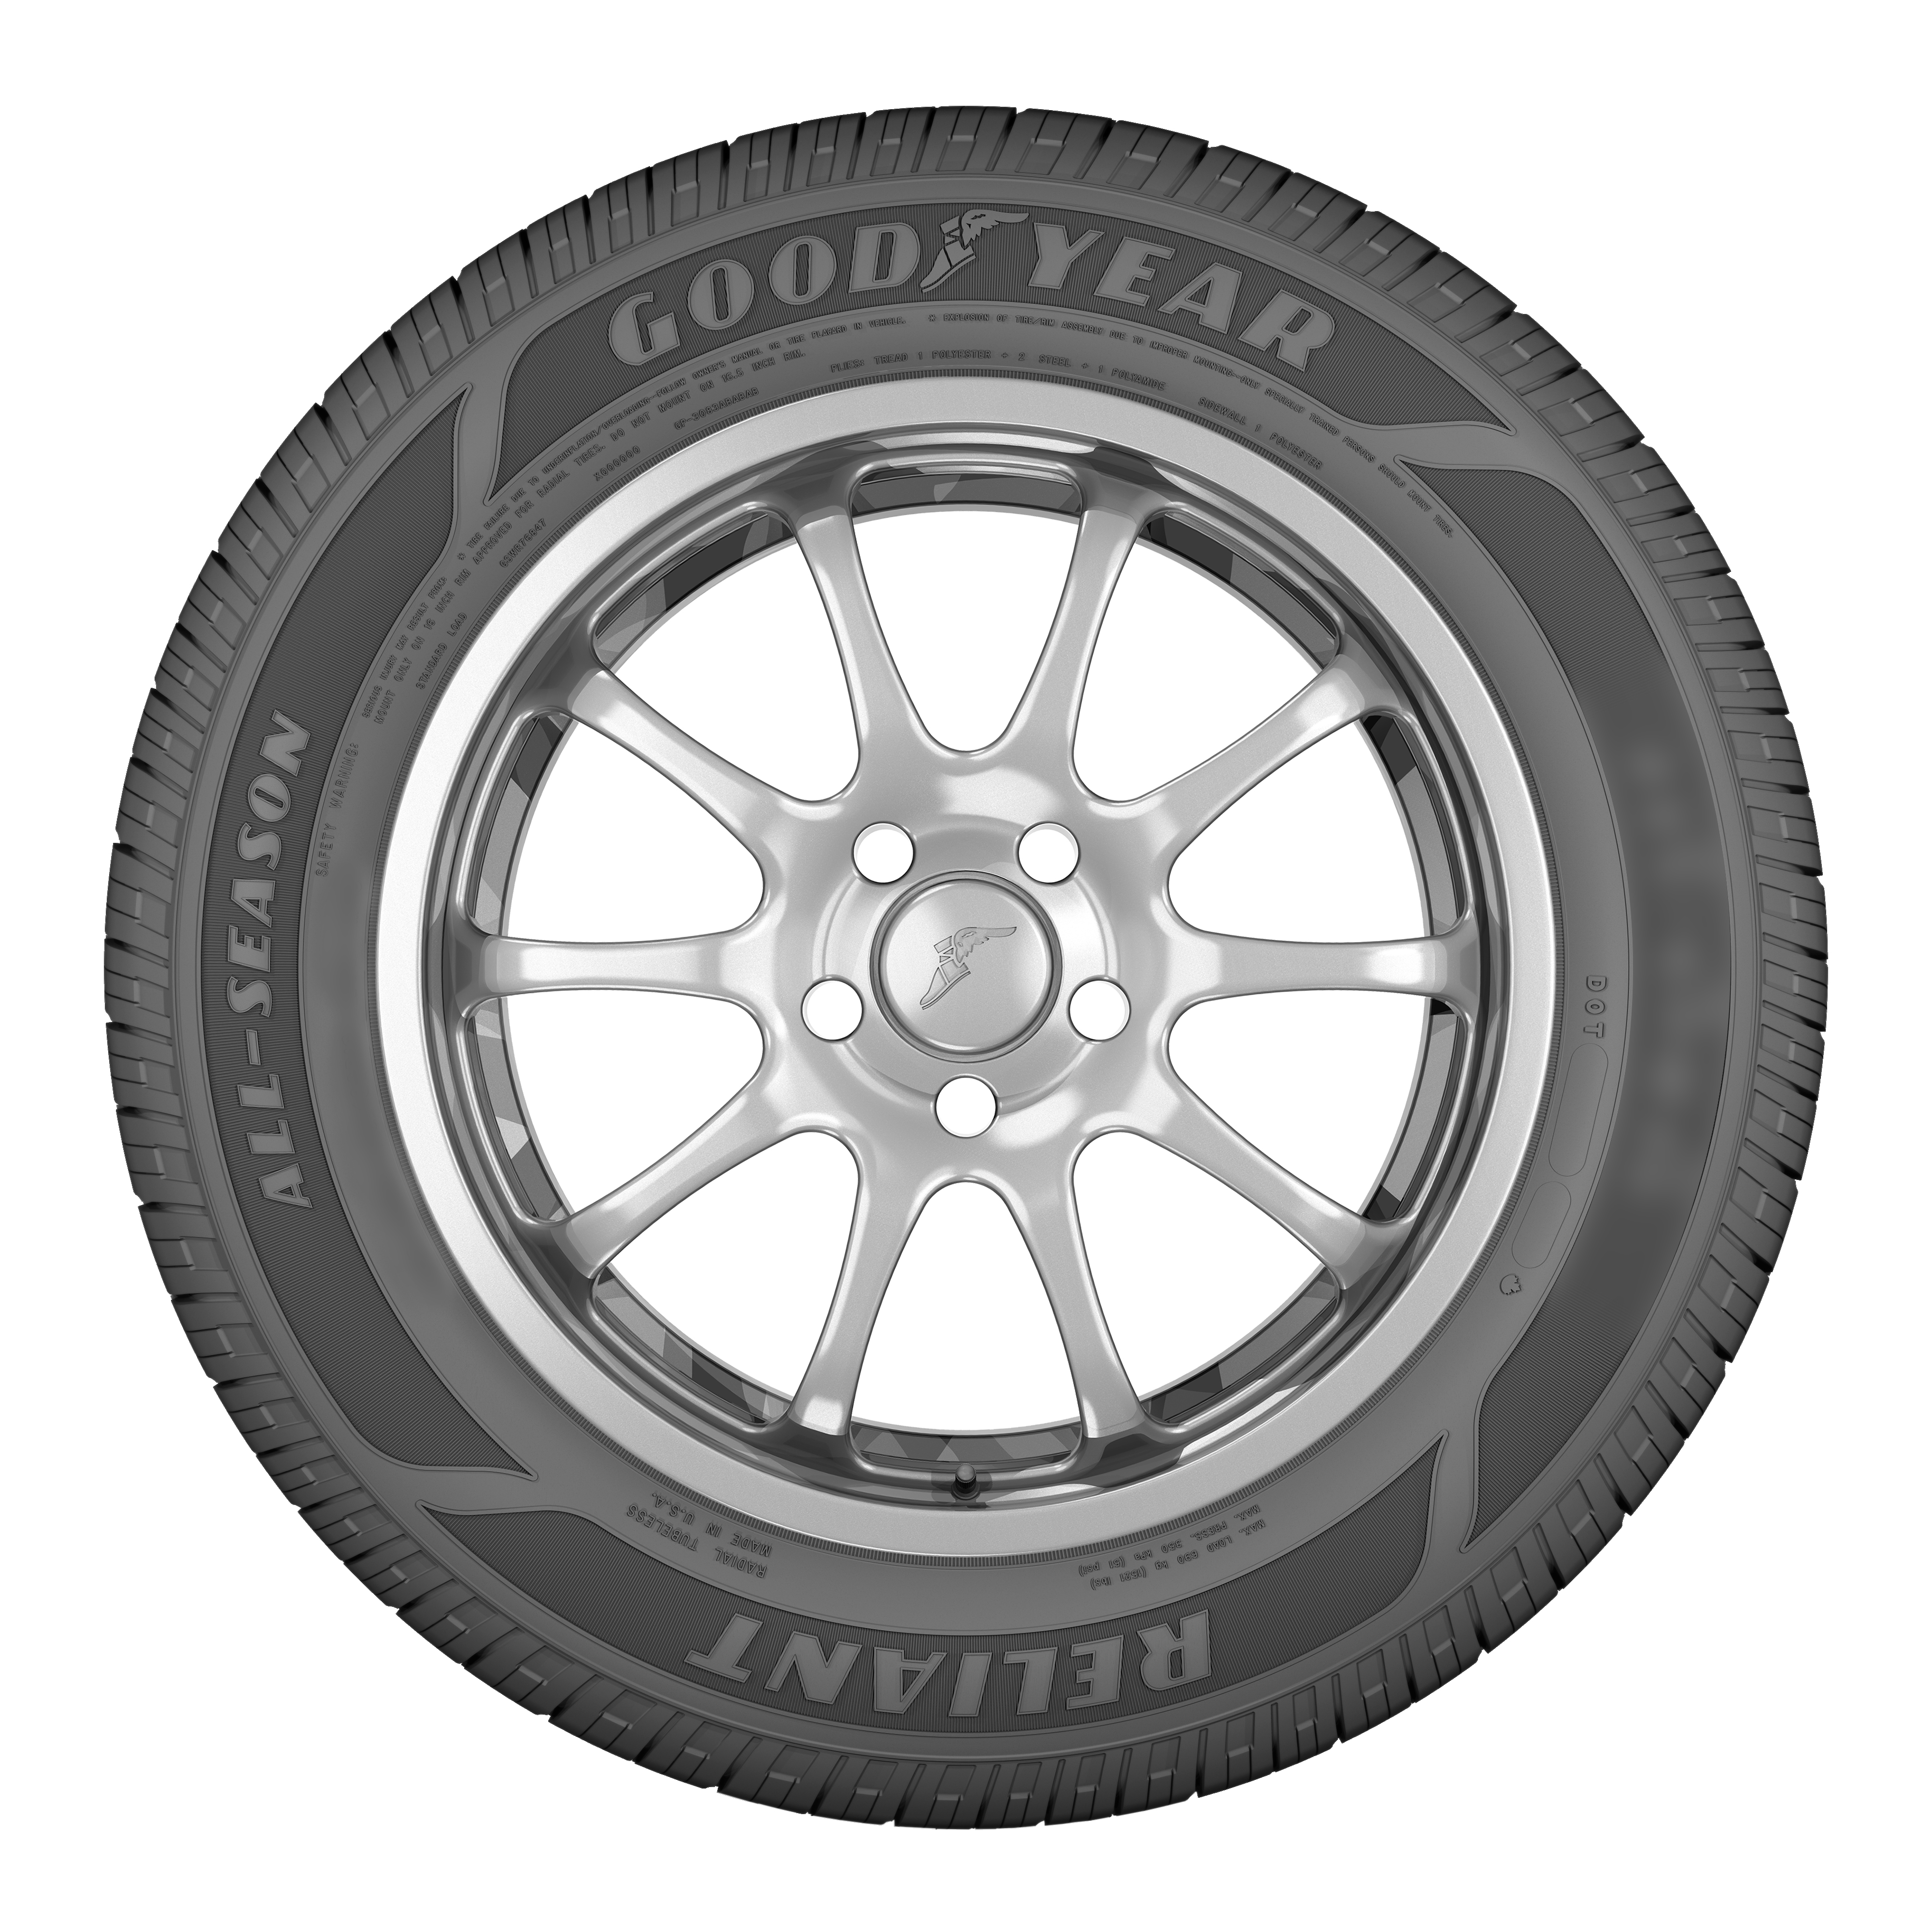 Goodyear Reliant All-Season 205/65R15 94H All-Season Tire - image 3 of 8